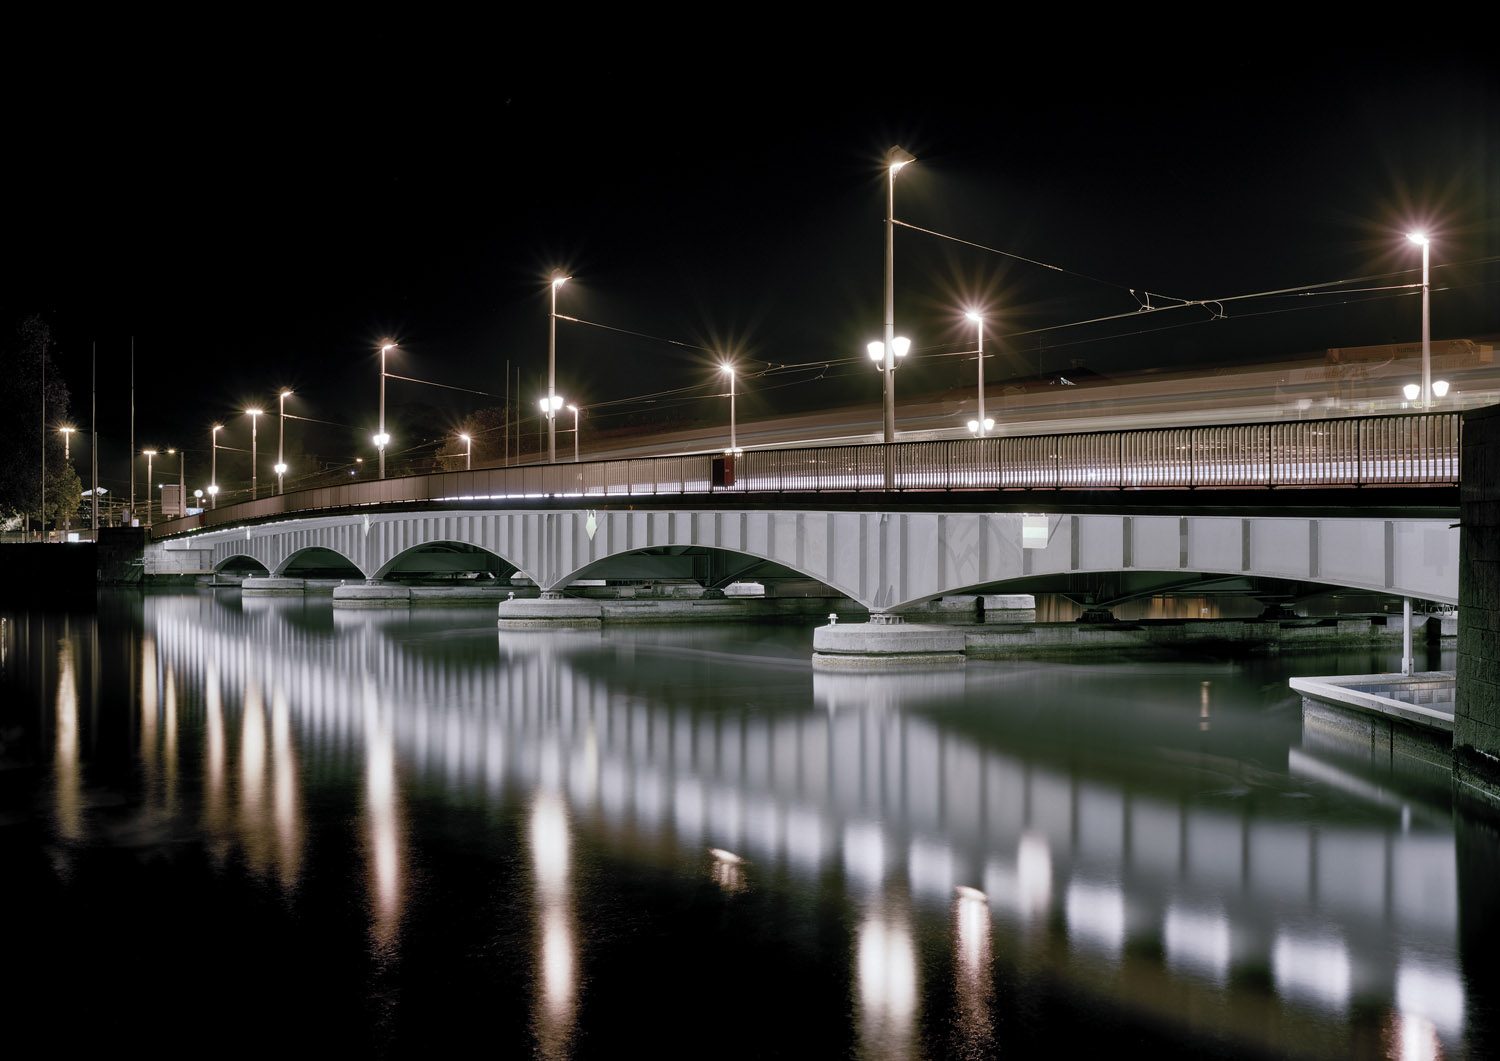 Quaibrücke bridge by night